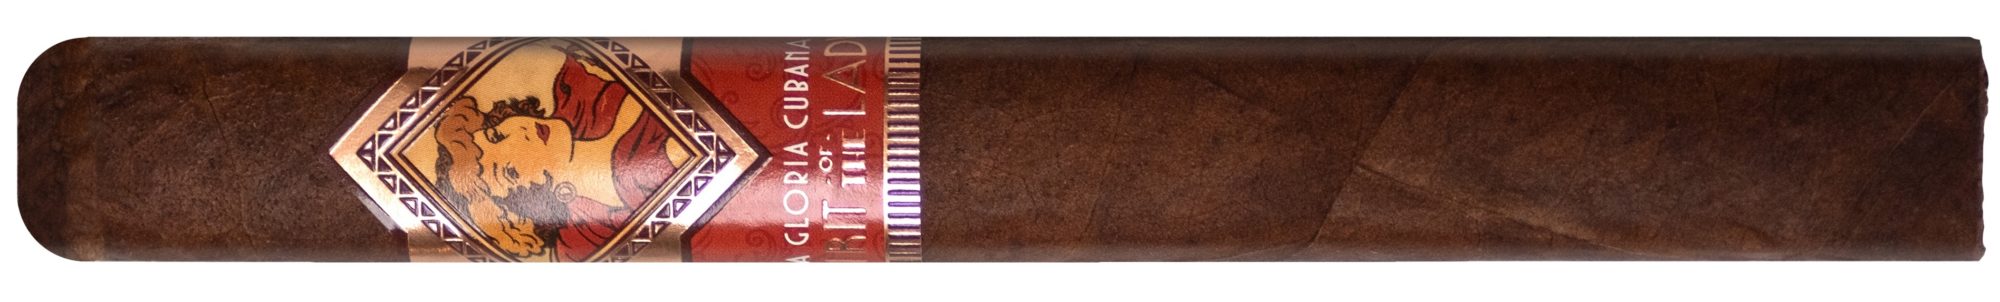 La Gloria Cubana Spirit of the Lady cigar horizontal